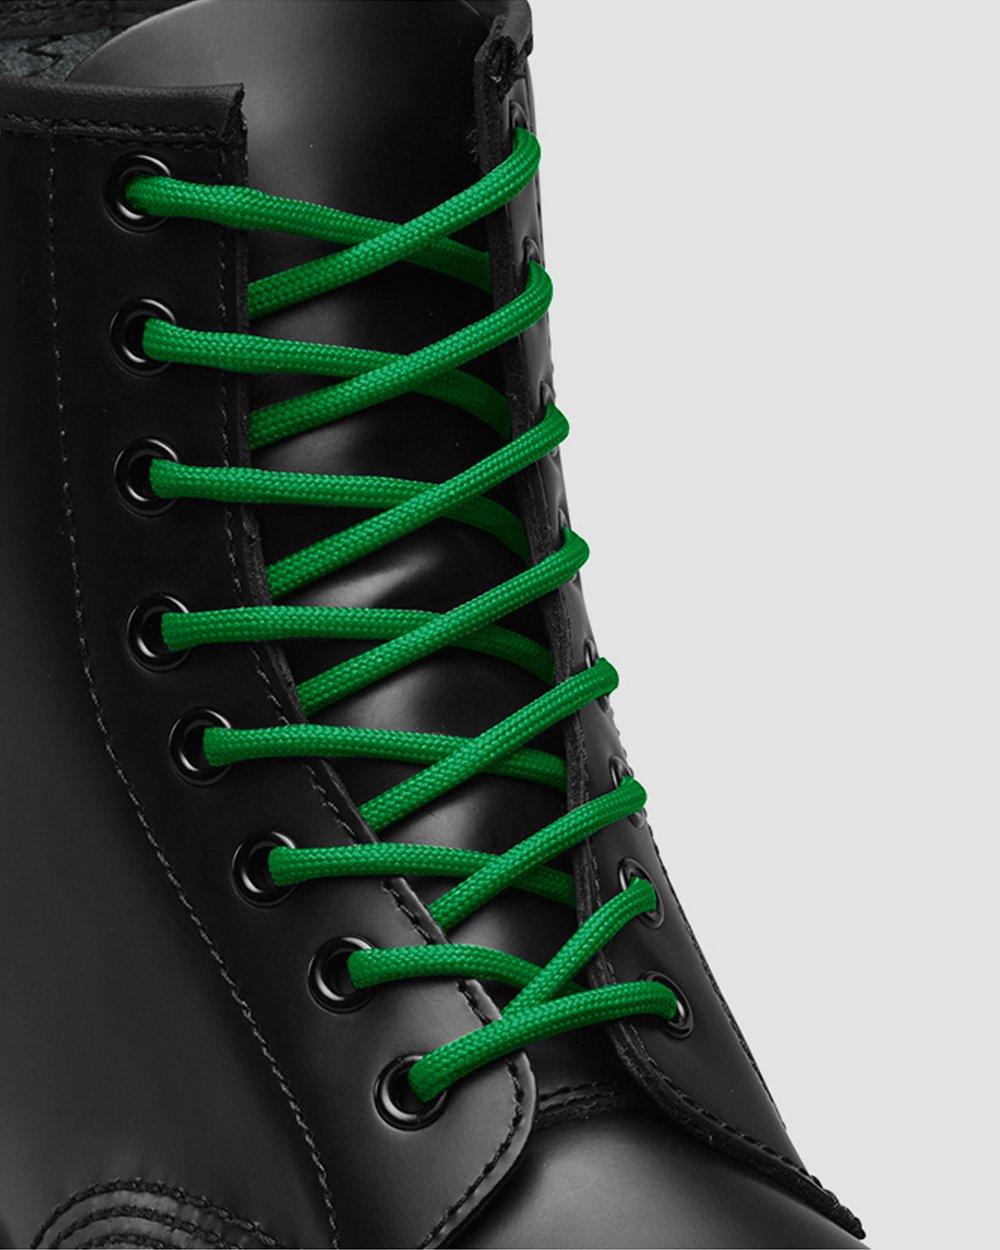 140cm 綠色圓形花邊鞋帶 (8-10孔鞋)